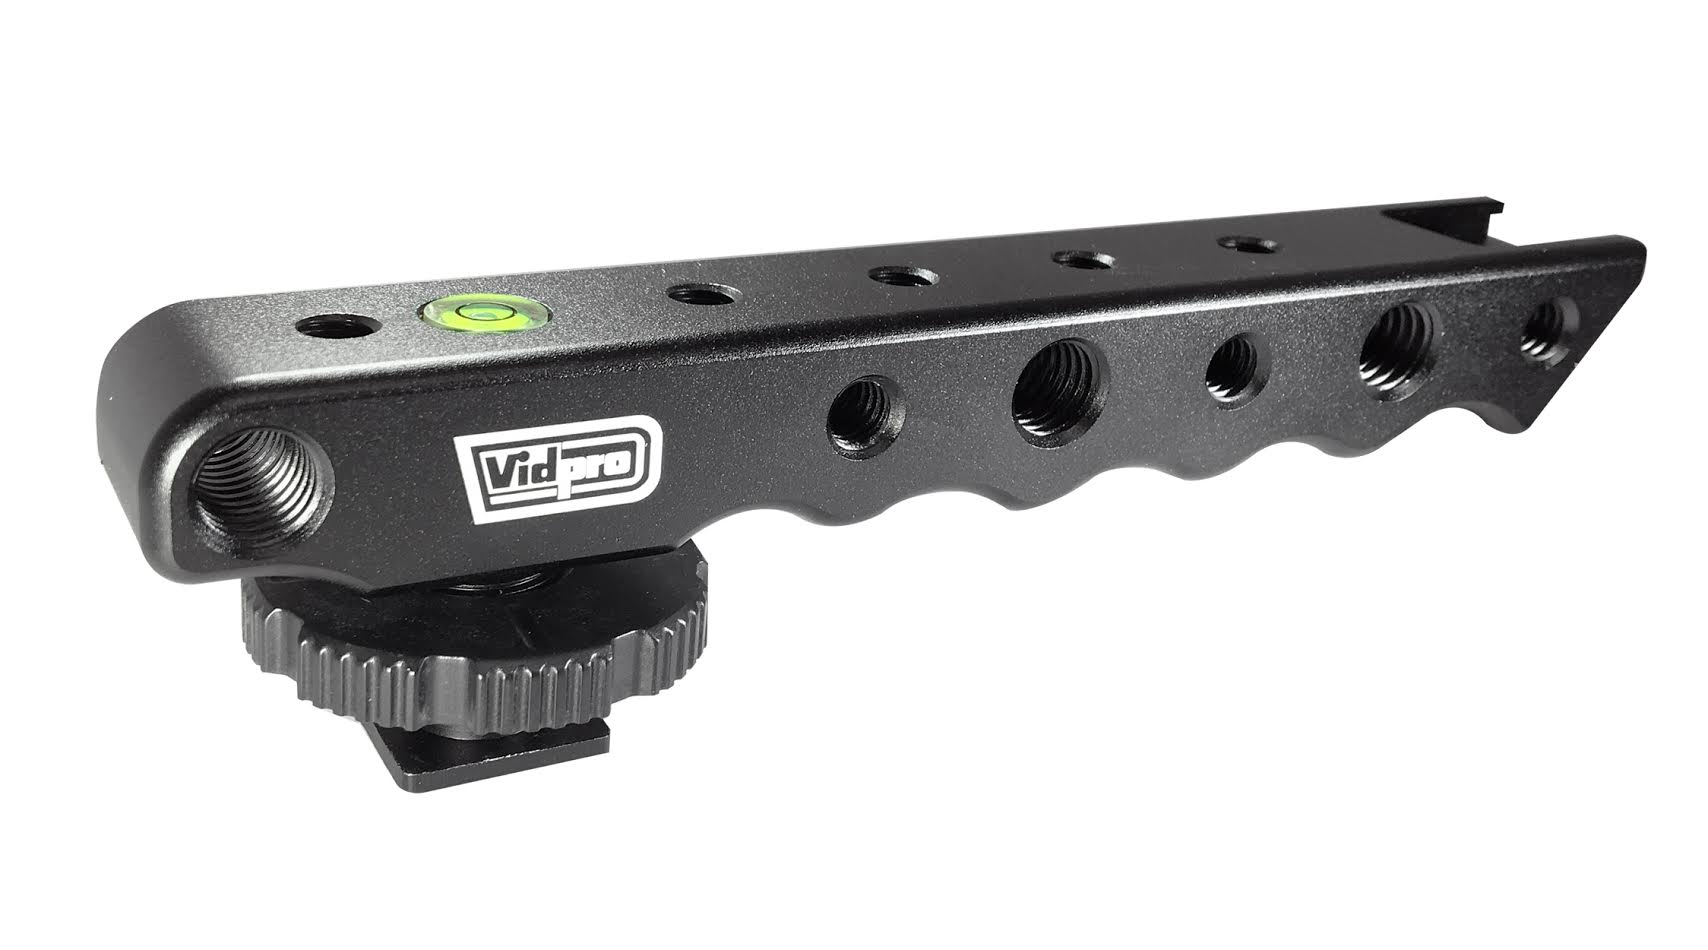 Video Stabilizers for Vivitar DVR 910 Camcorder